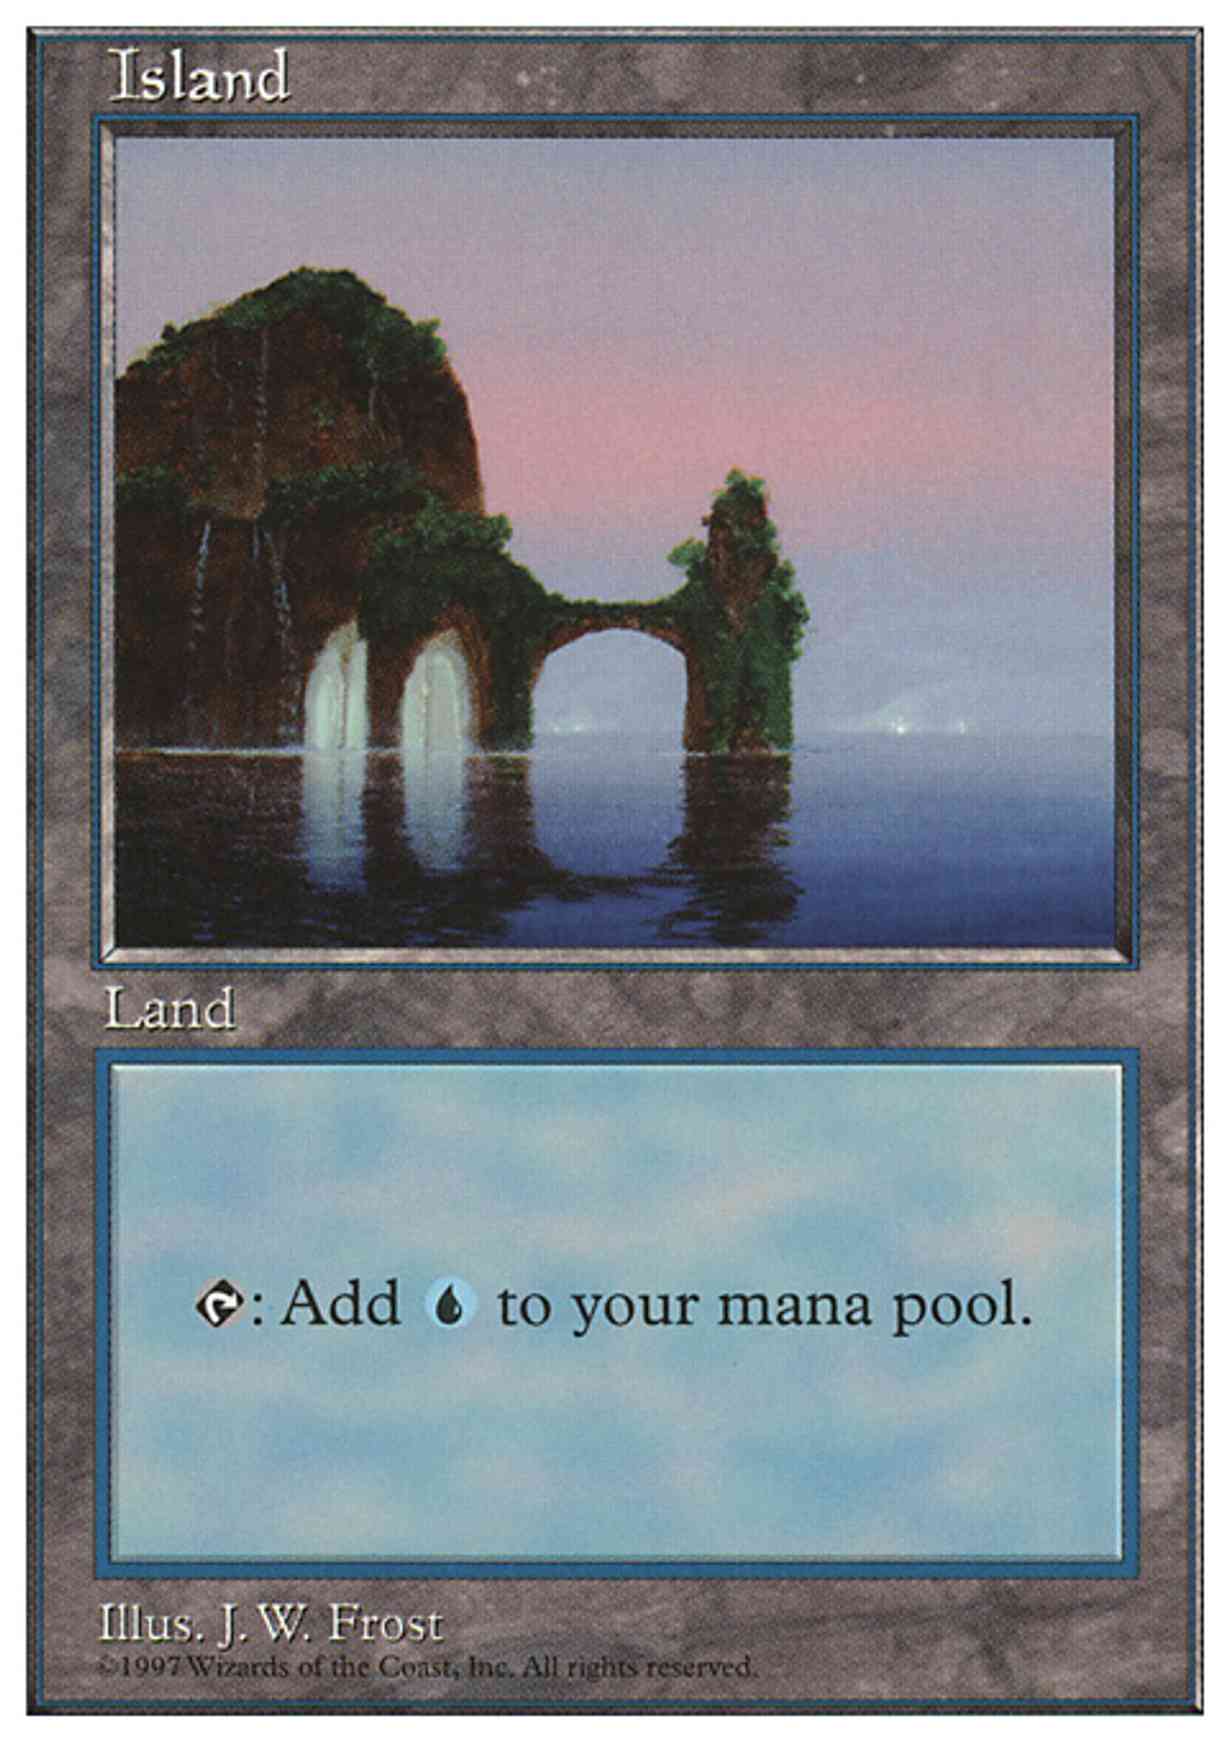 Island (434) magic card front